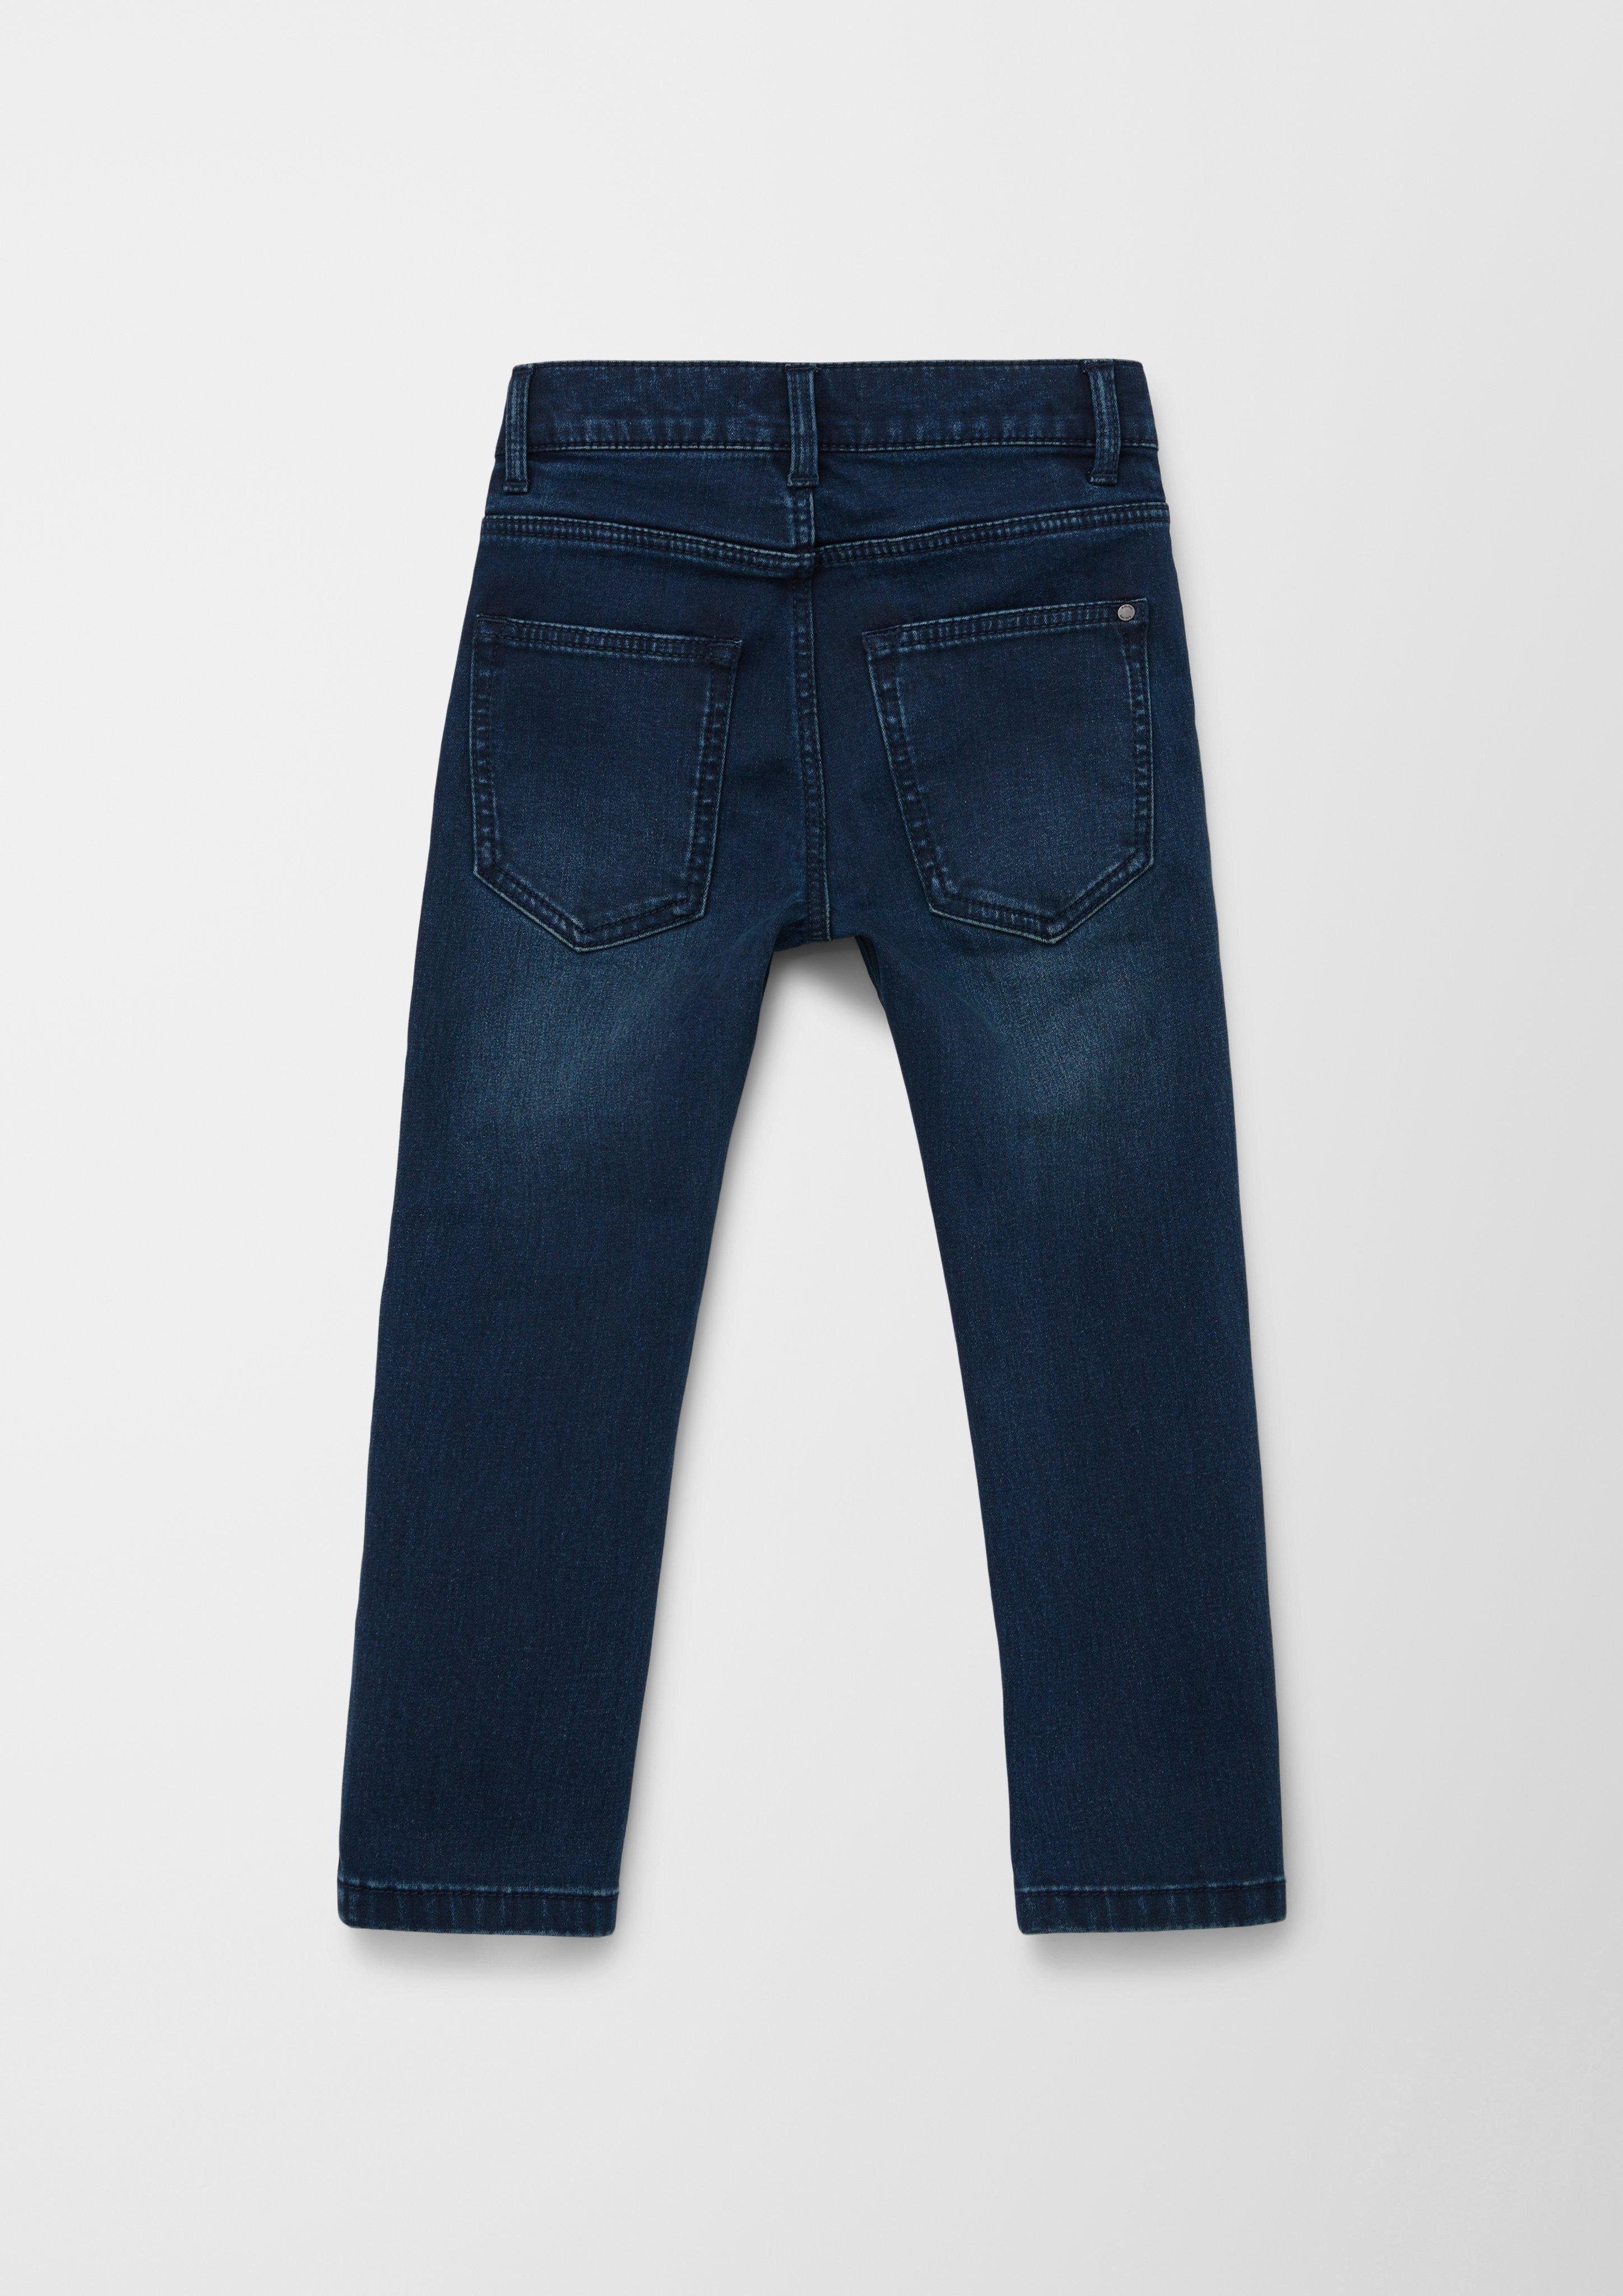 Leg Waschung / Jeans / / s.Oliver / Used-Look Rise Mid 5-Pocket-Jeans Fit Regular Straight Pelle Kontrastnähte,